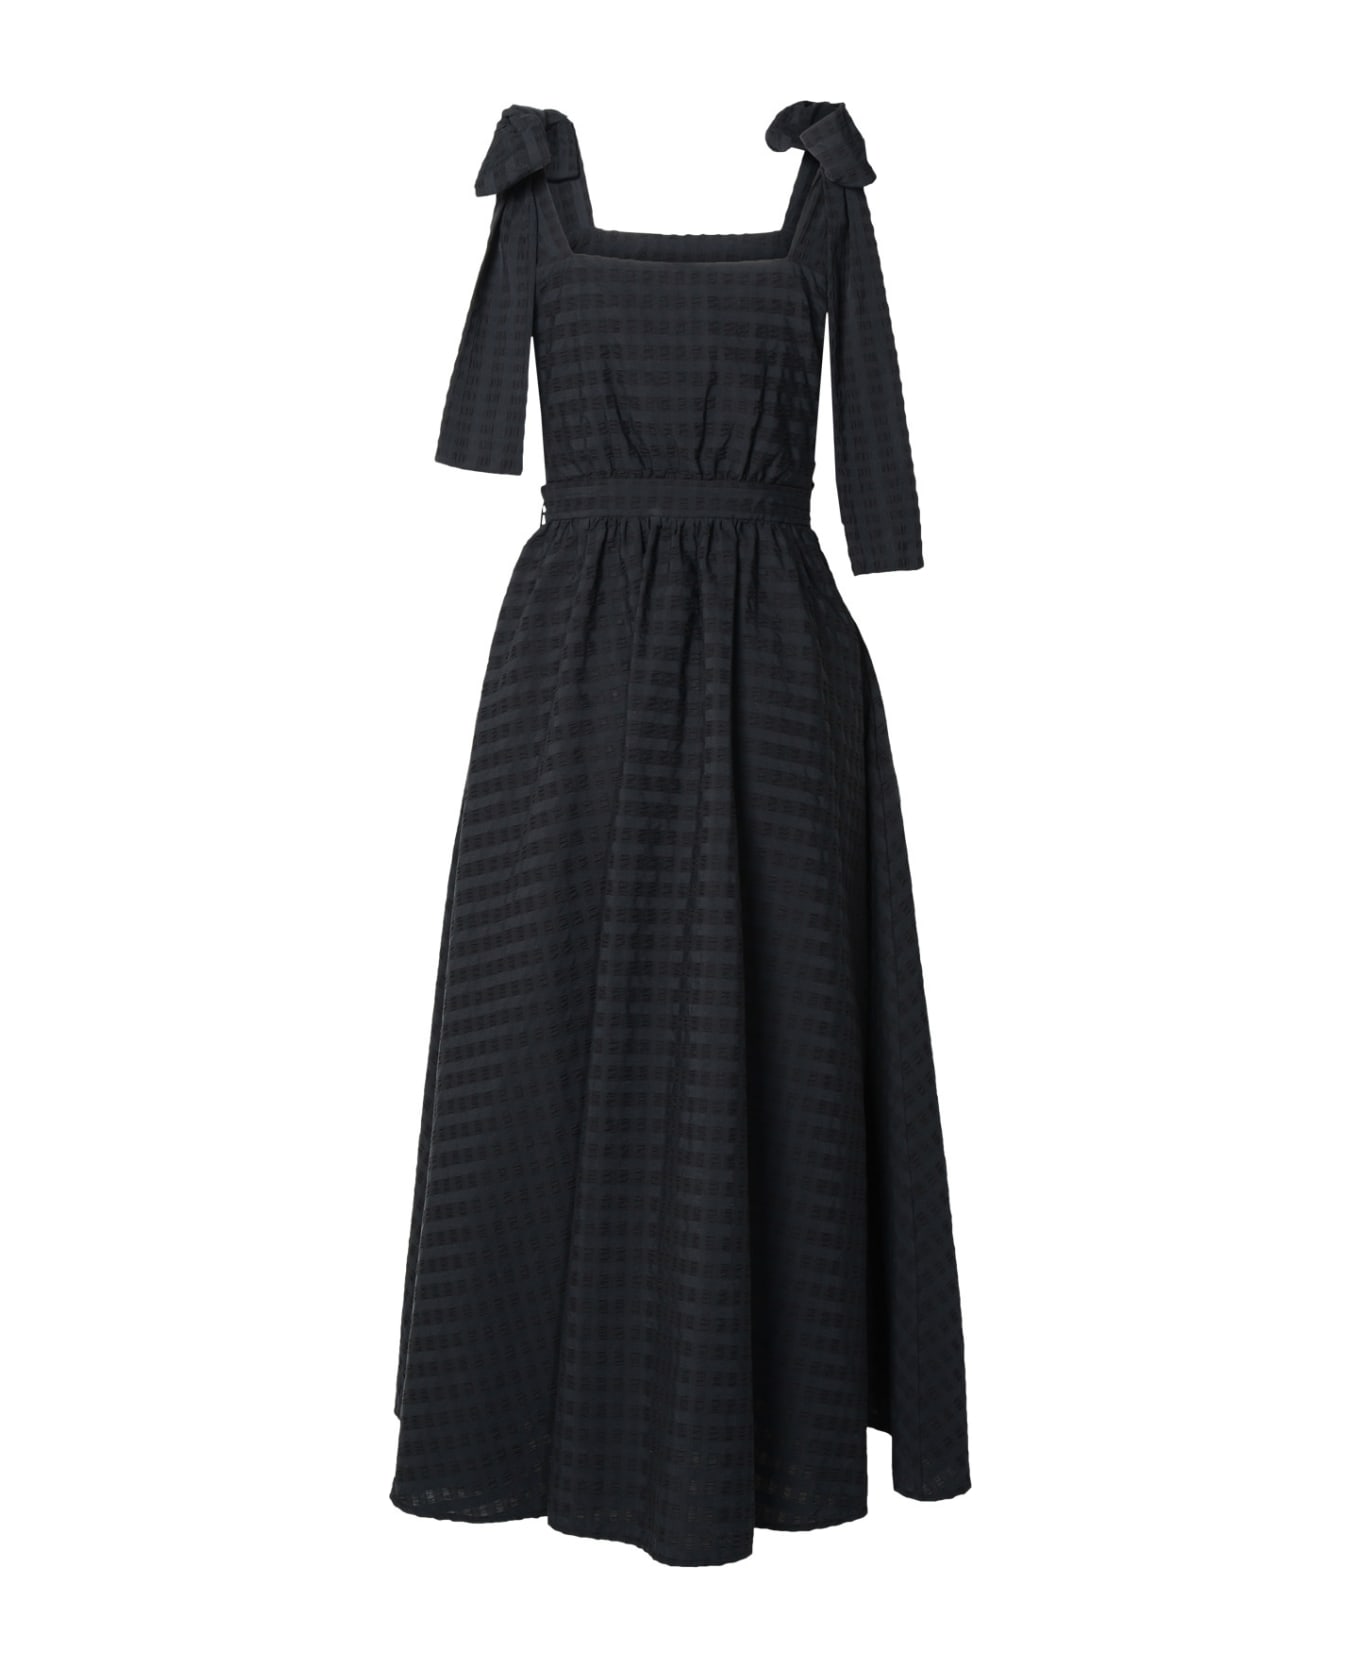 MSGM Black Cotton Blend Dress - Black